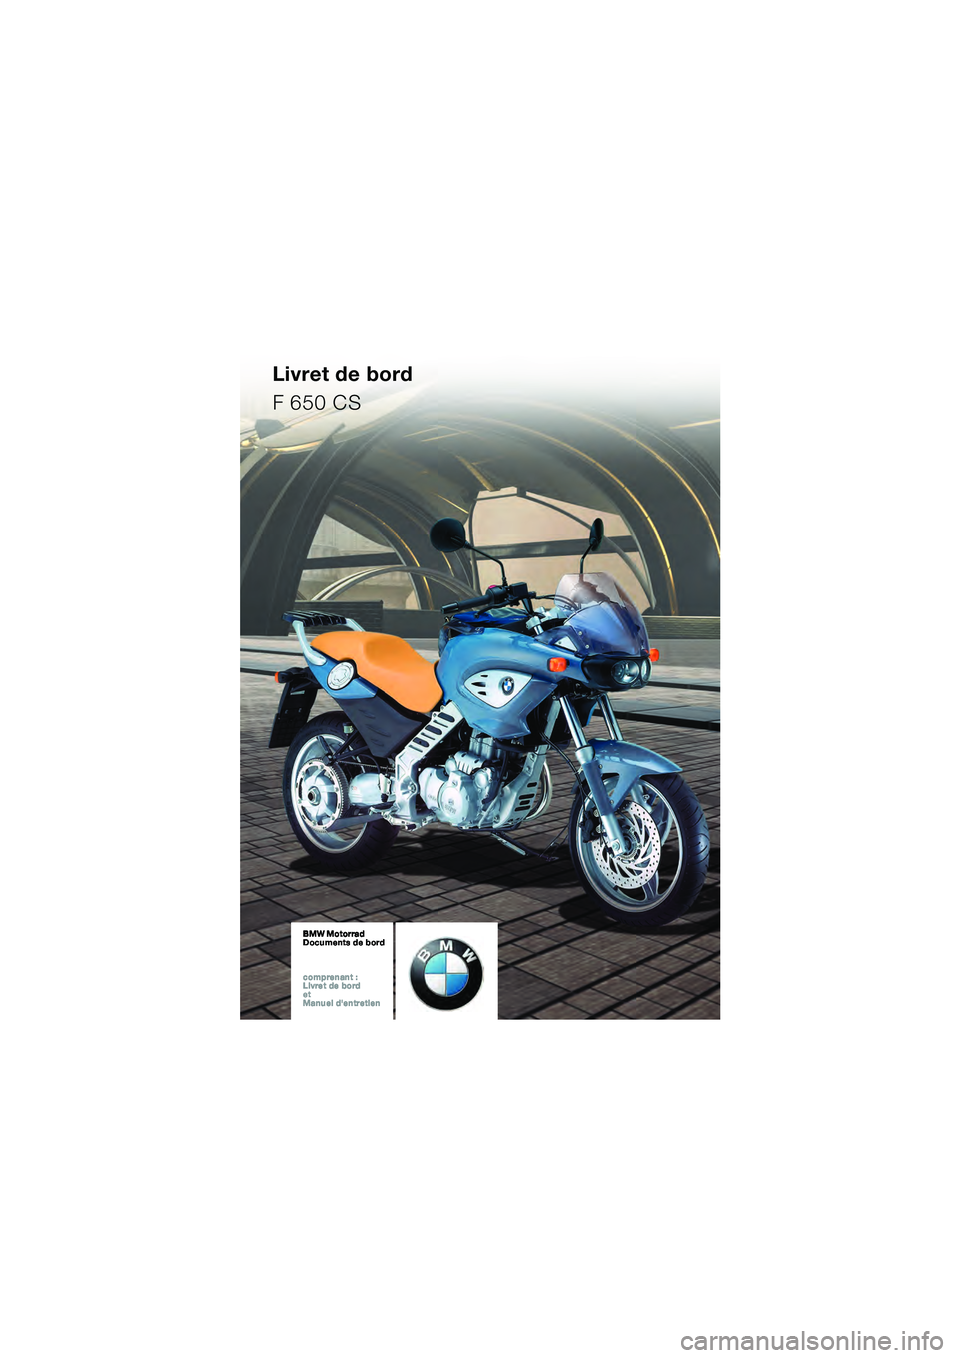 BMW MOTORRAD F 650 CS 2003  Livret de bord (in French) Livret de bord
F 650 CS
10K14bkf2.book  Seite 1  Montag, 15. September 2003  1:03 13 